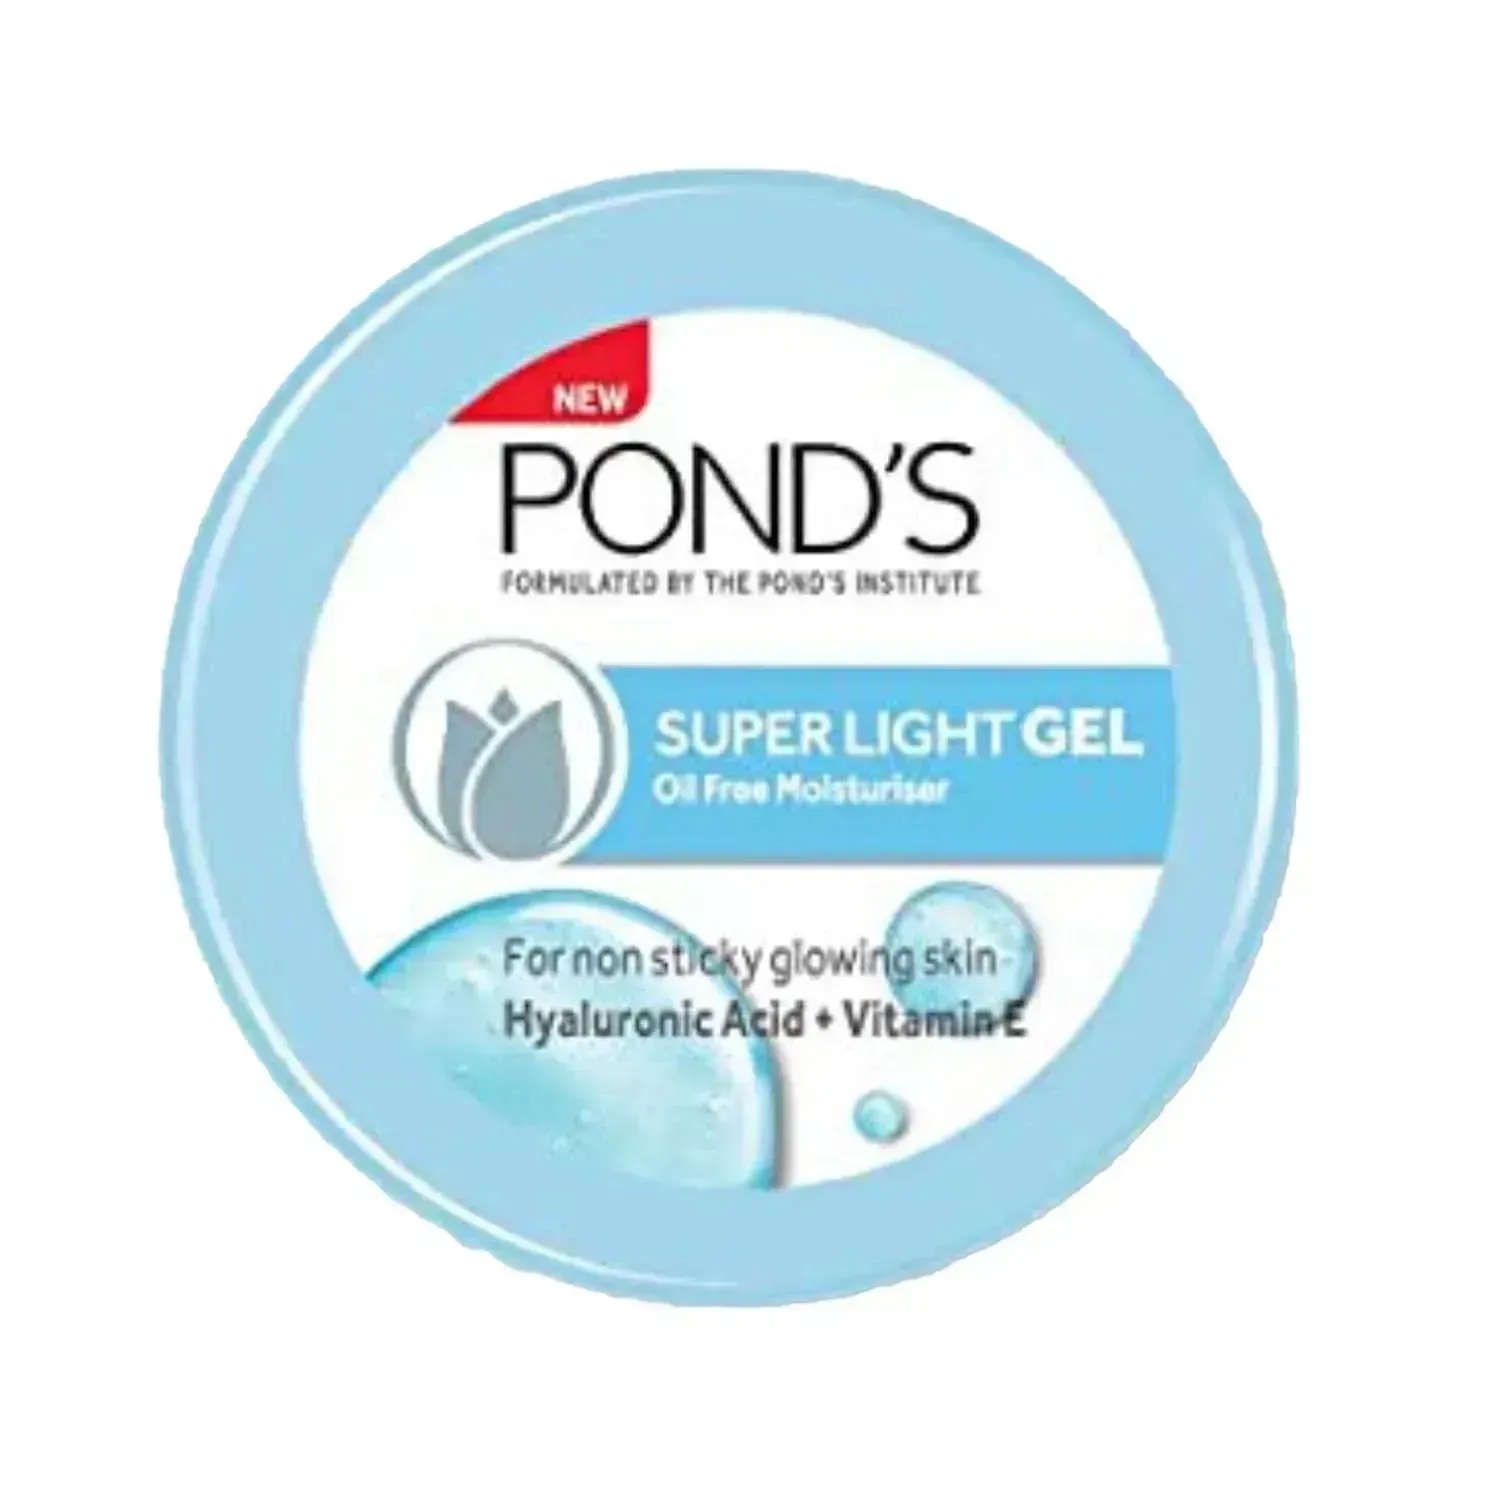 Pond's | Pond's Super Light Gel Moisturiser - (25g)